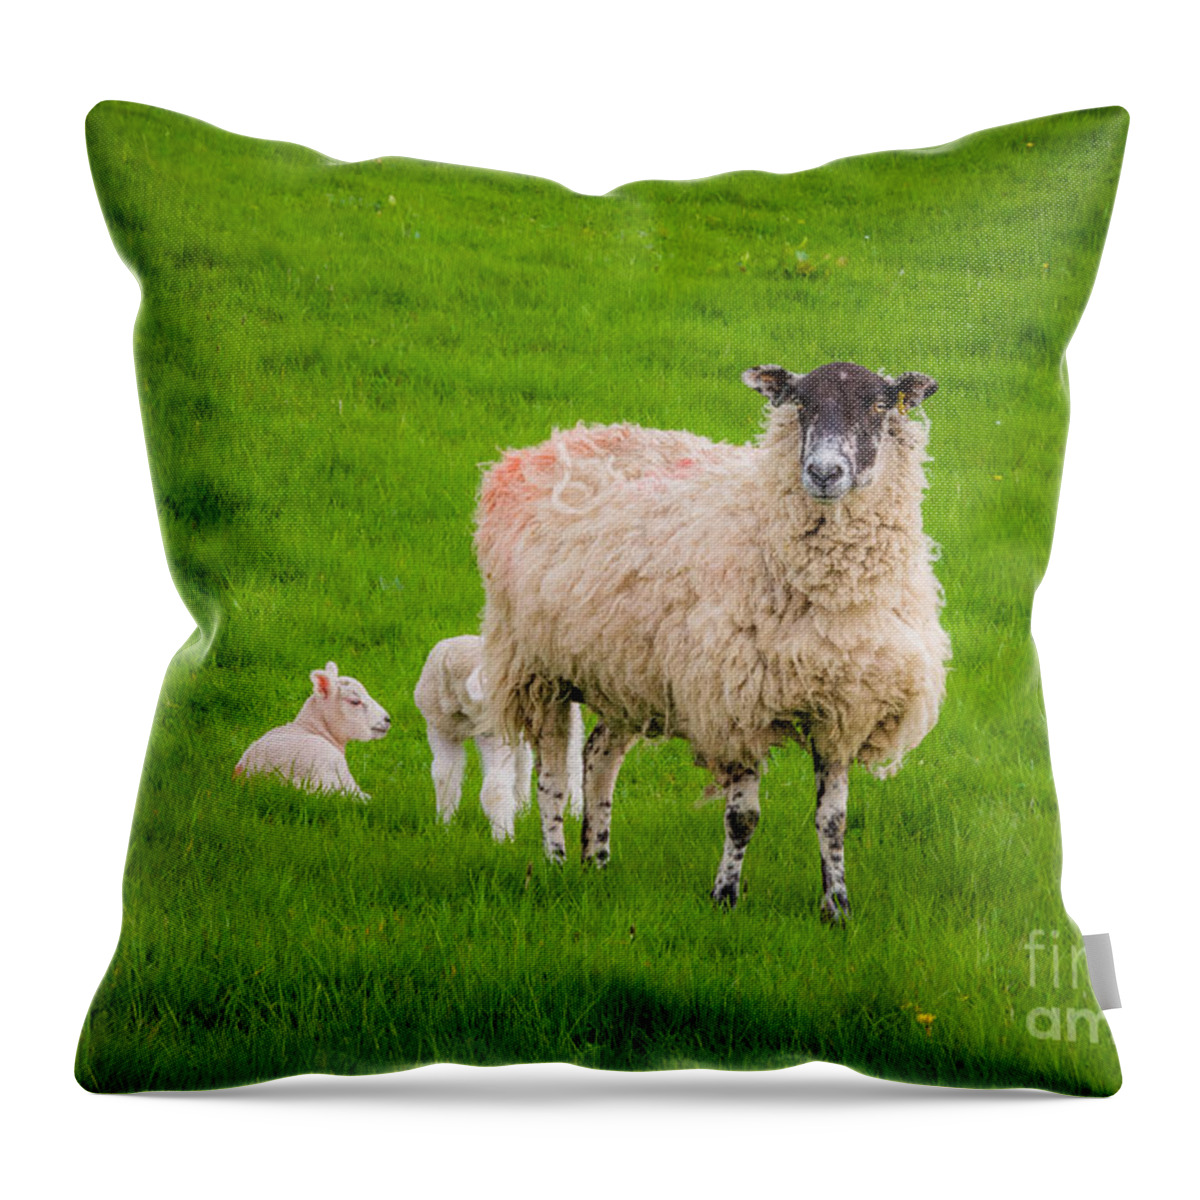 D90 Throw Pillow featuring the photograph Sheep and lambs by Mariusz Talarek